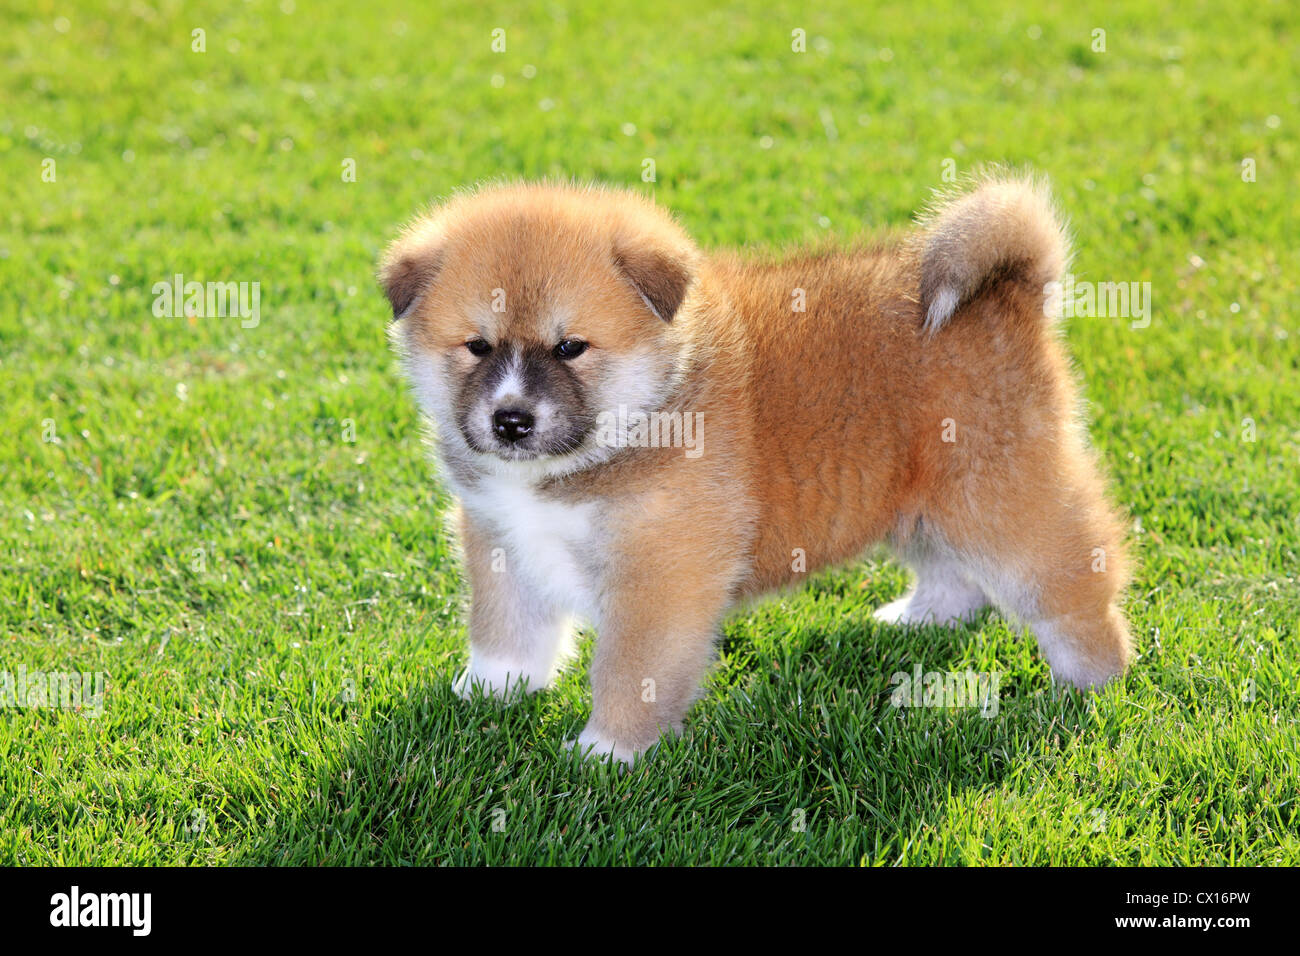 Akita Inu Dog High Resolution Stock Photography and Images - Alamy